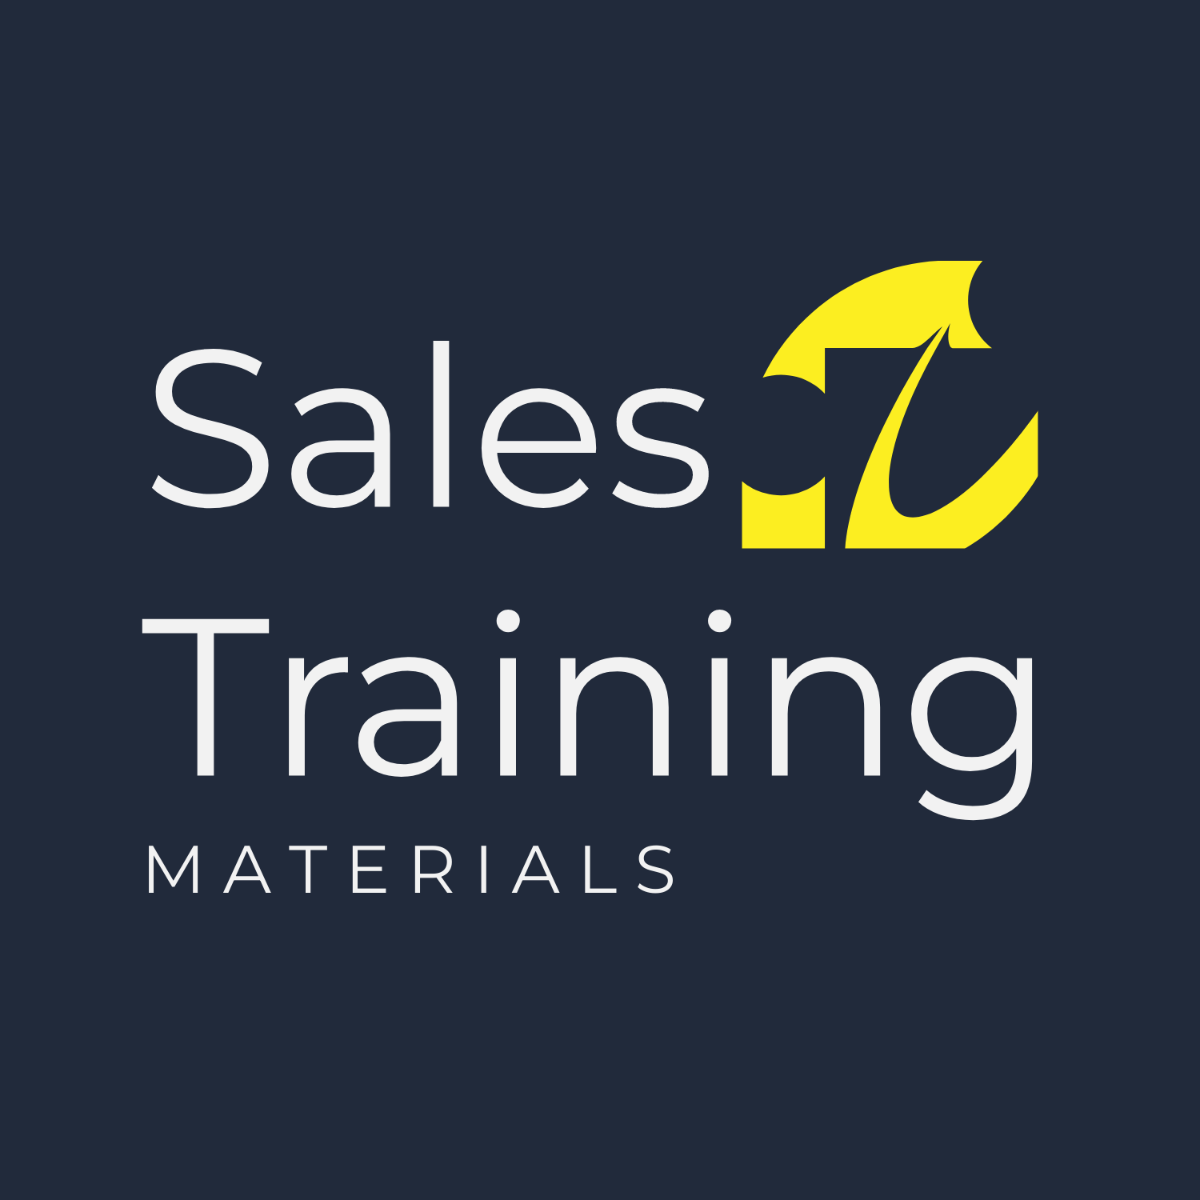 Sales Training Materials Logo